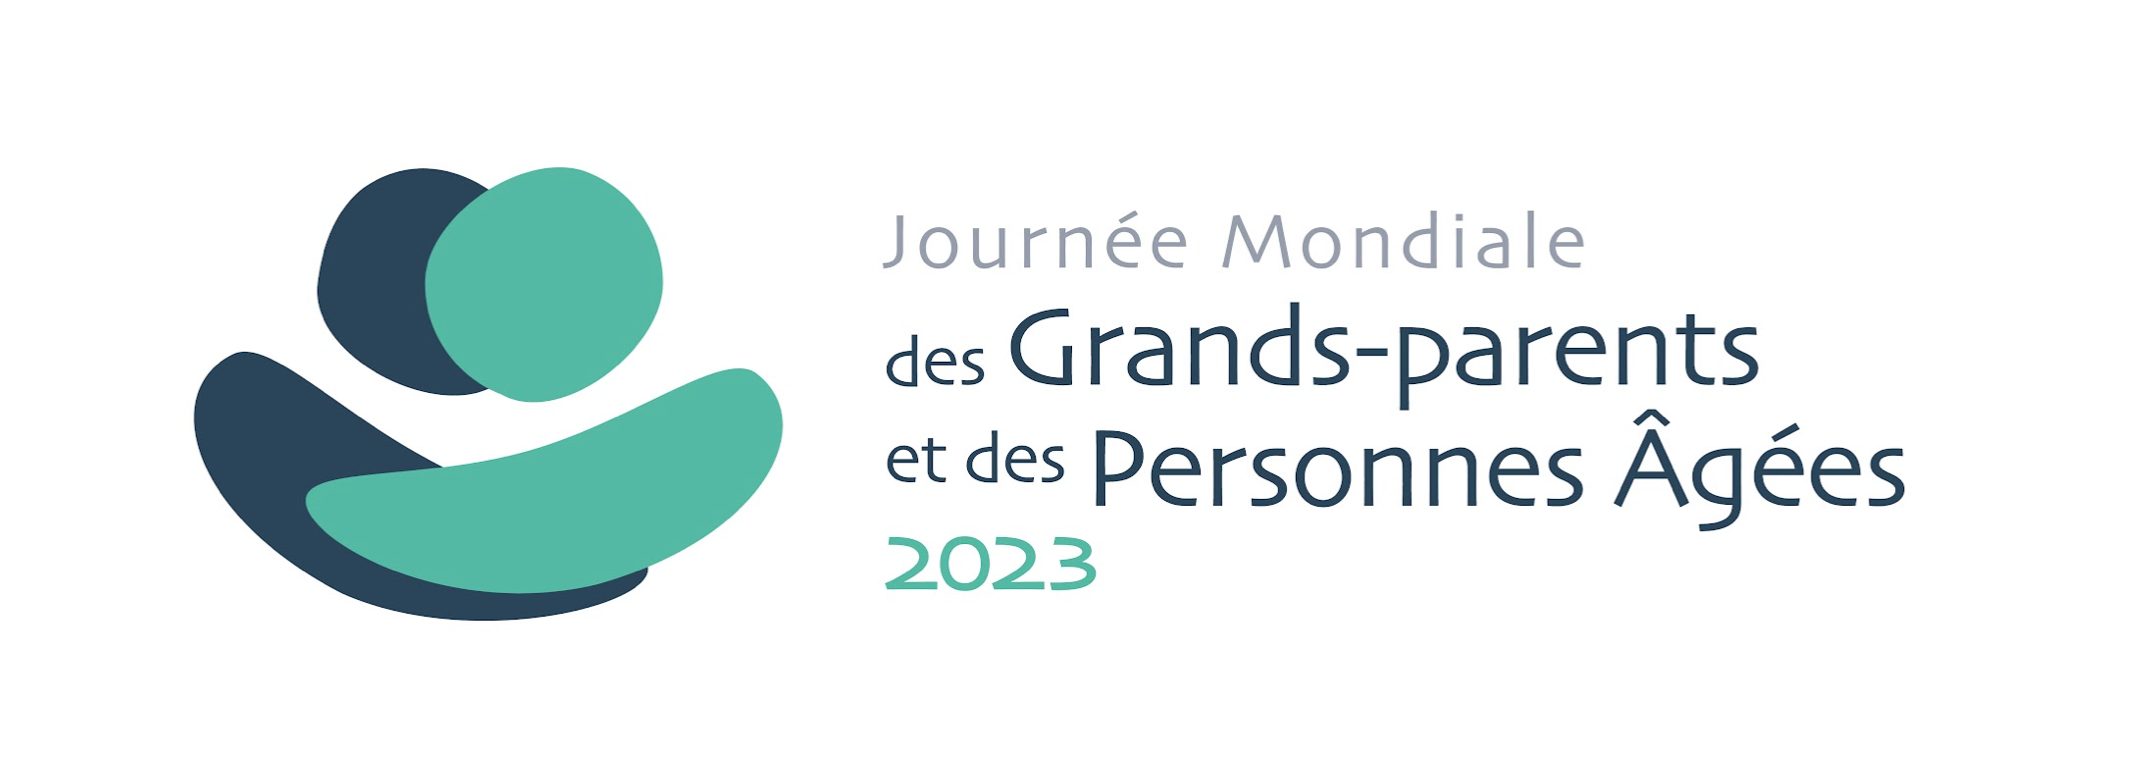 Logo JM des Grands-Parents 2023